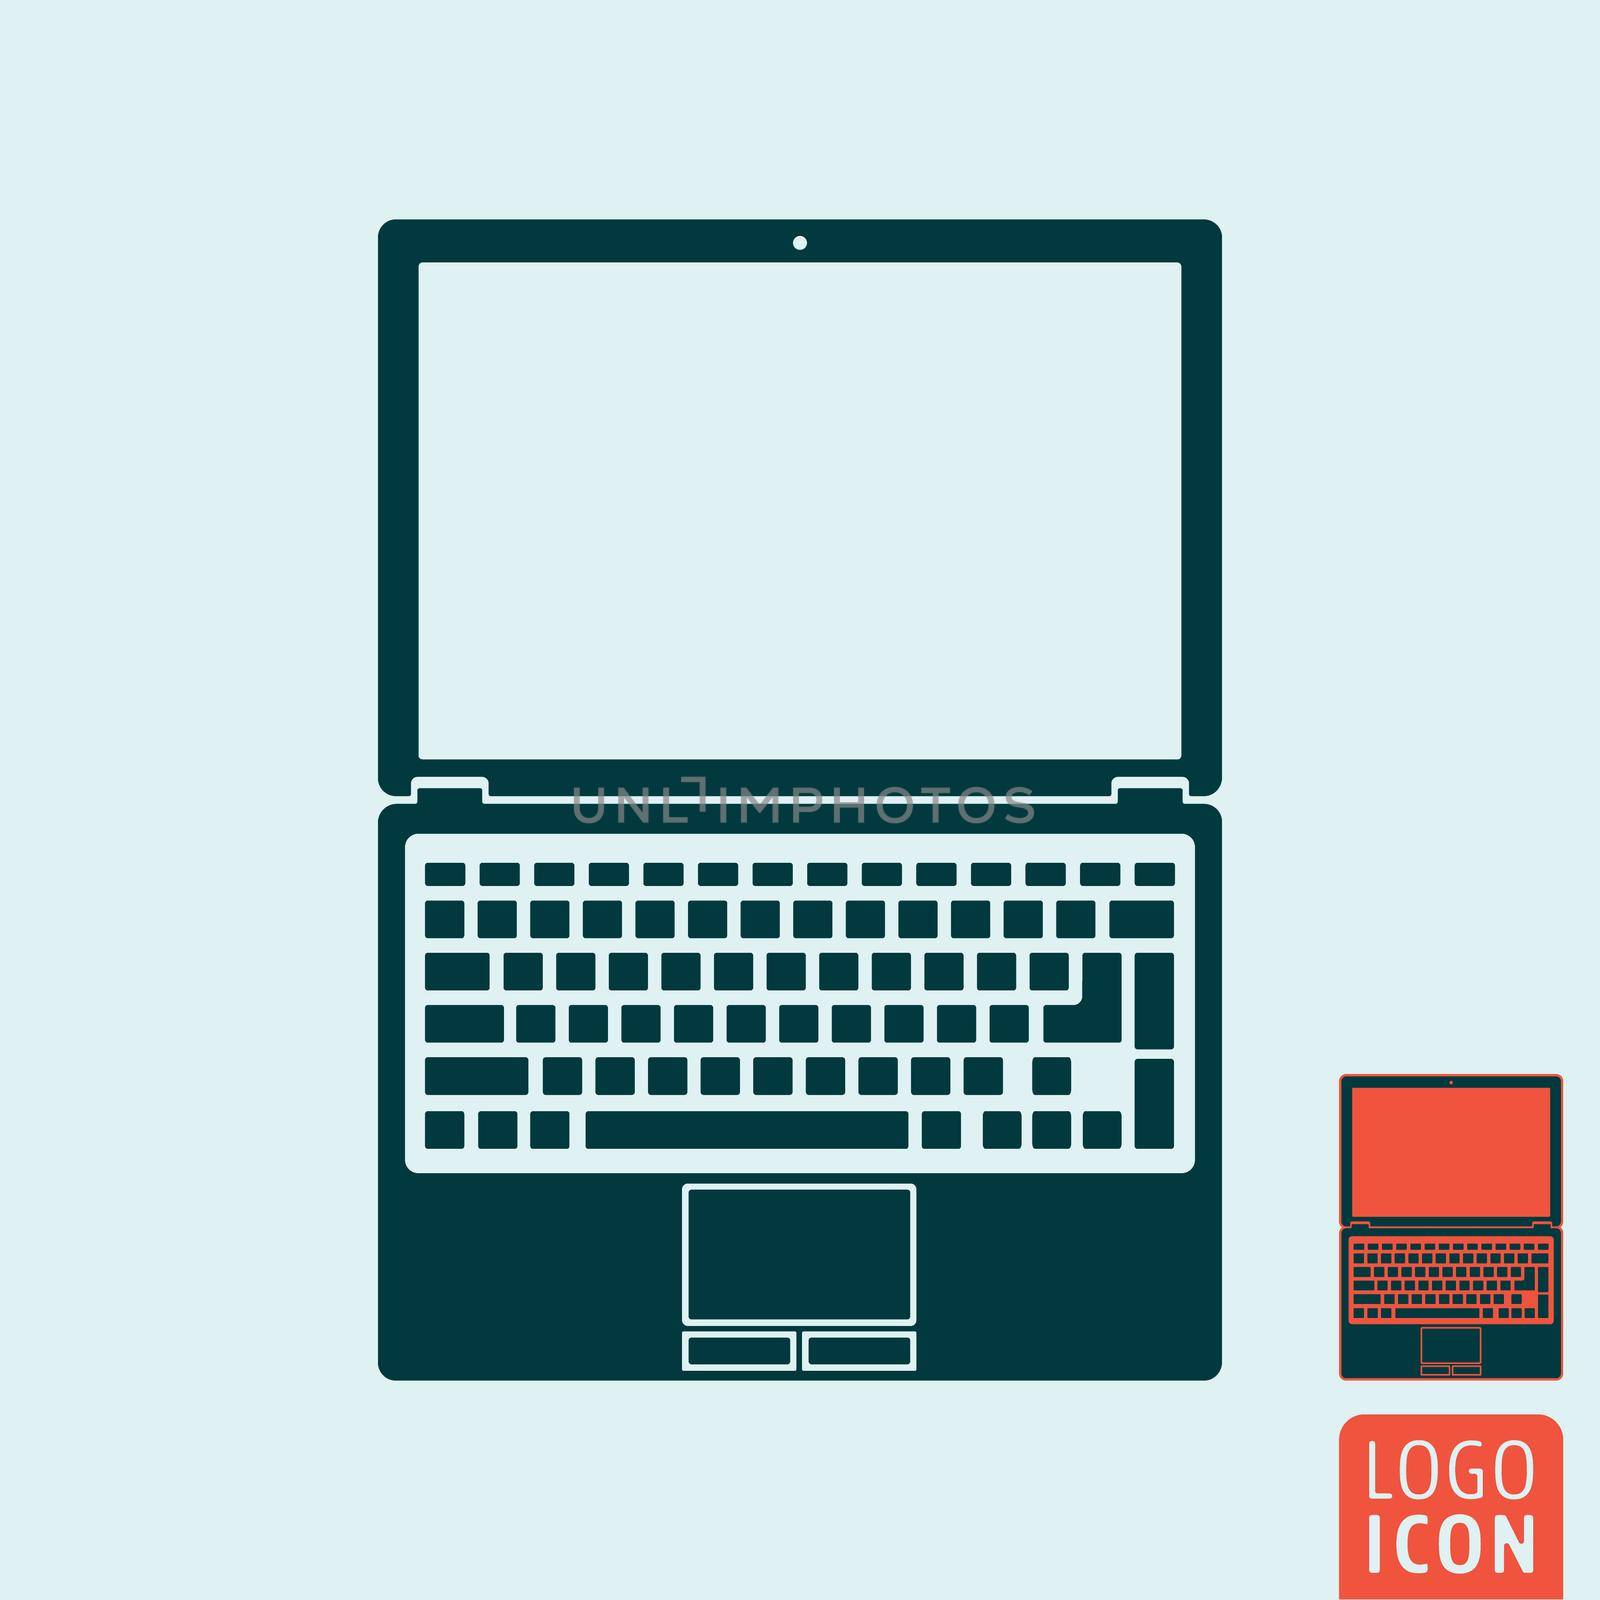 Laptop computer icon by Bobnevv